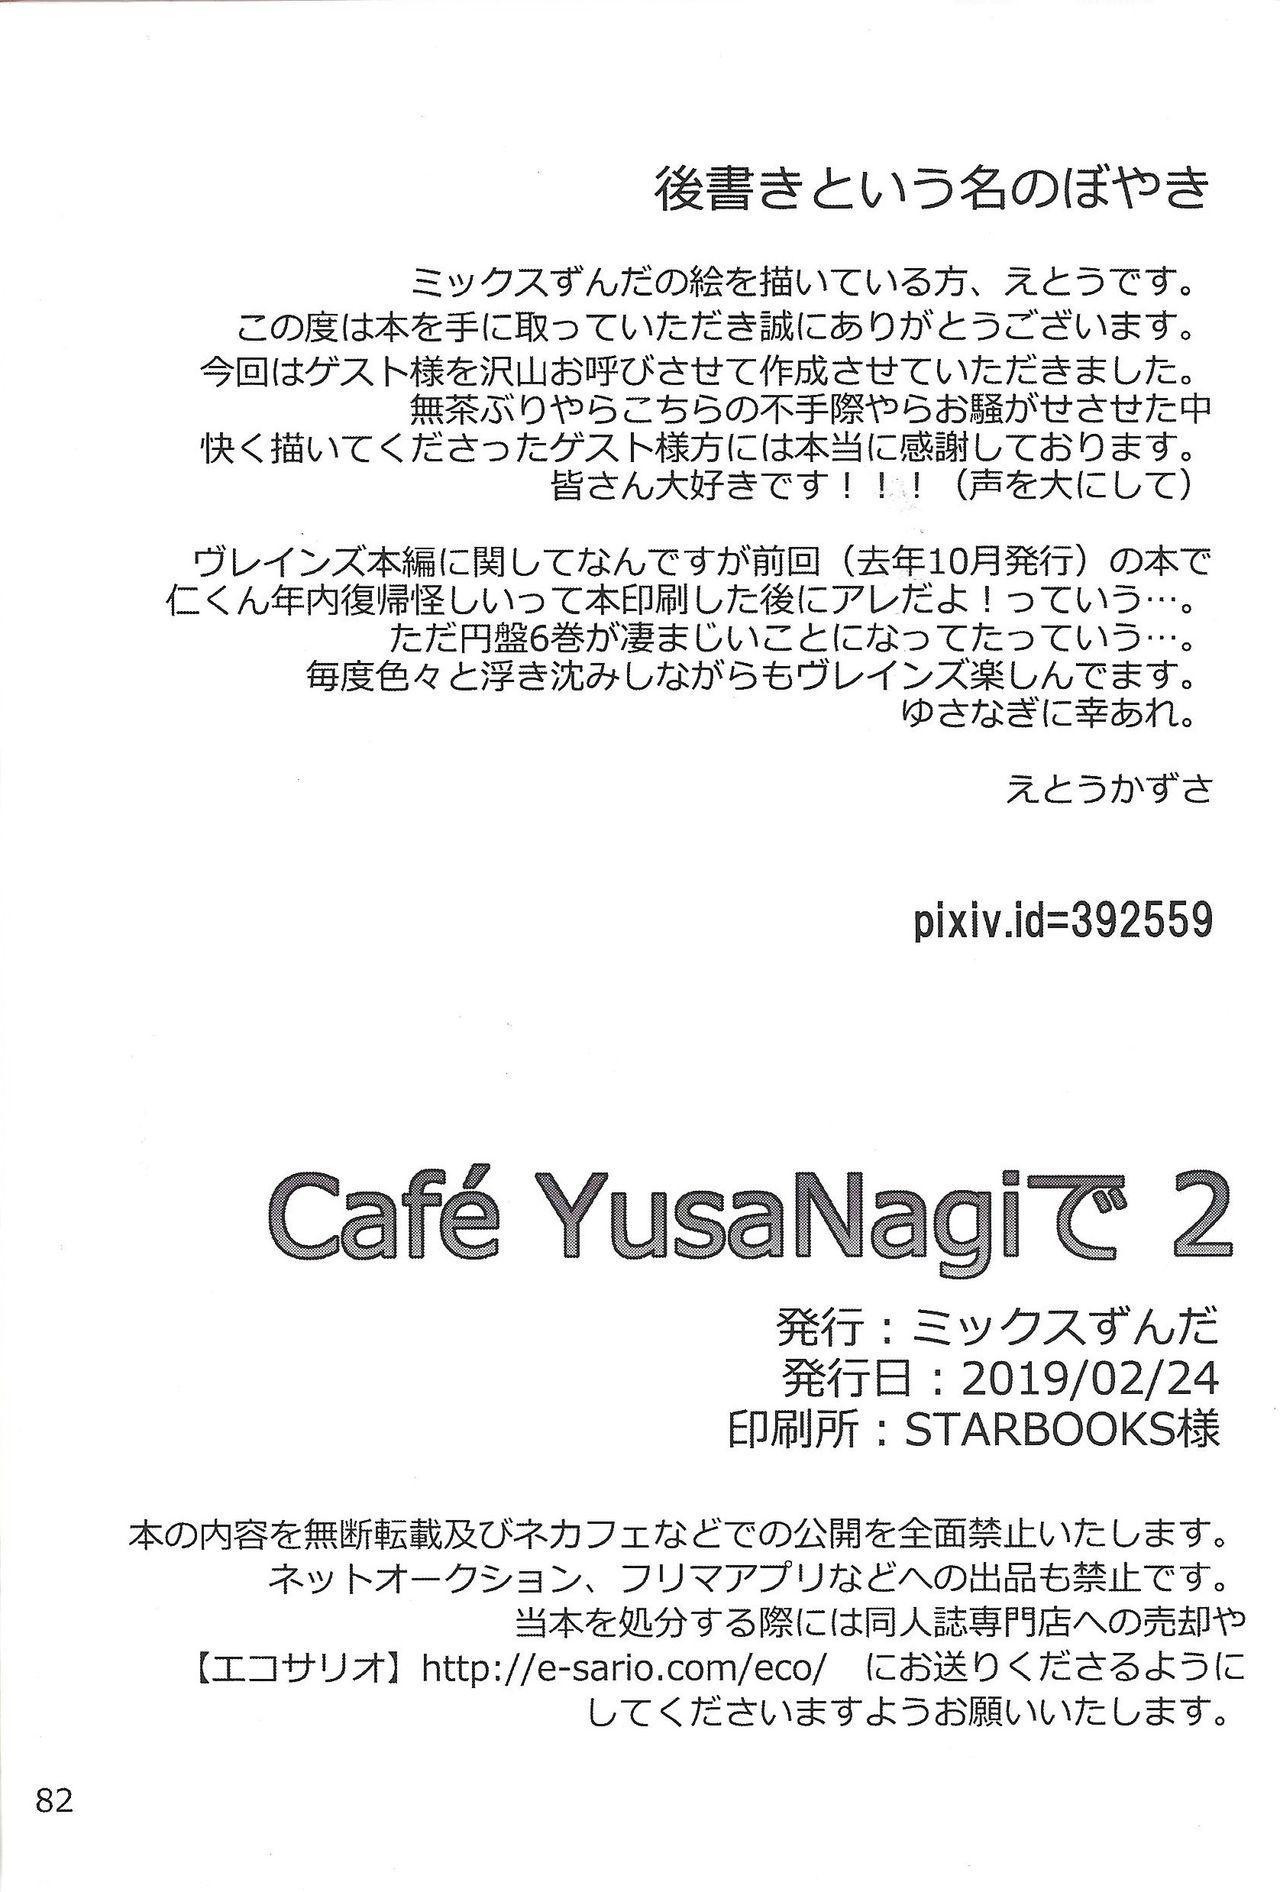 CaféYusaNagi de 2 61